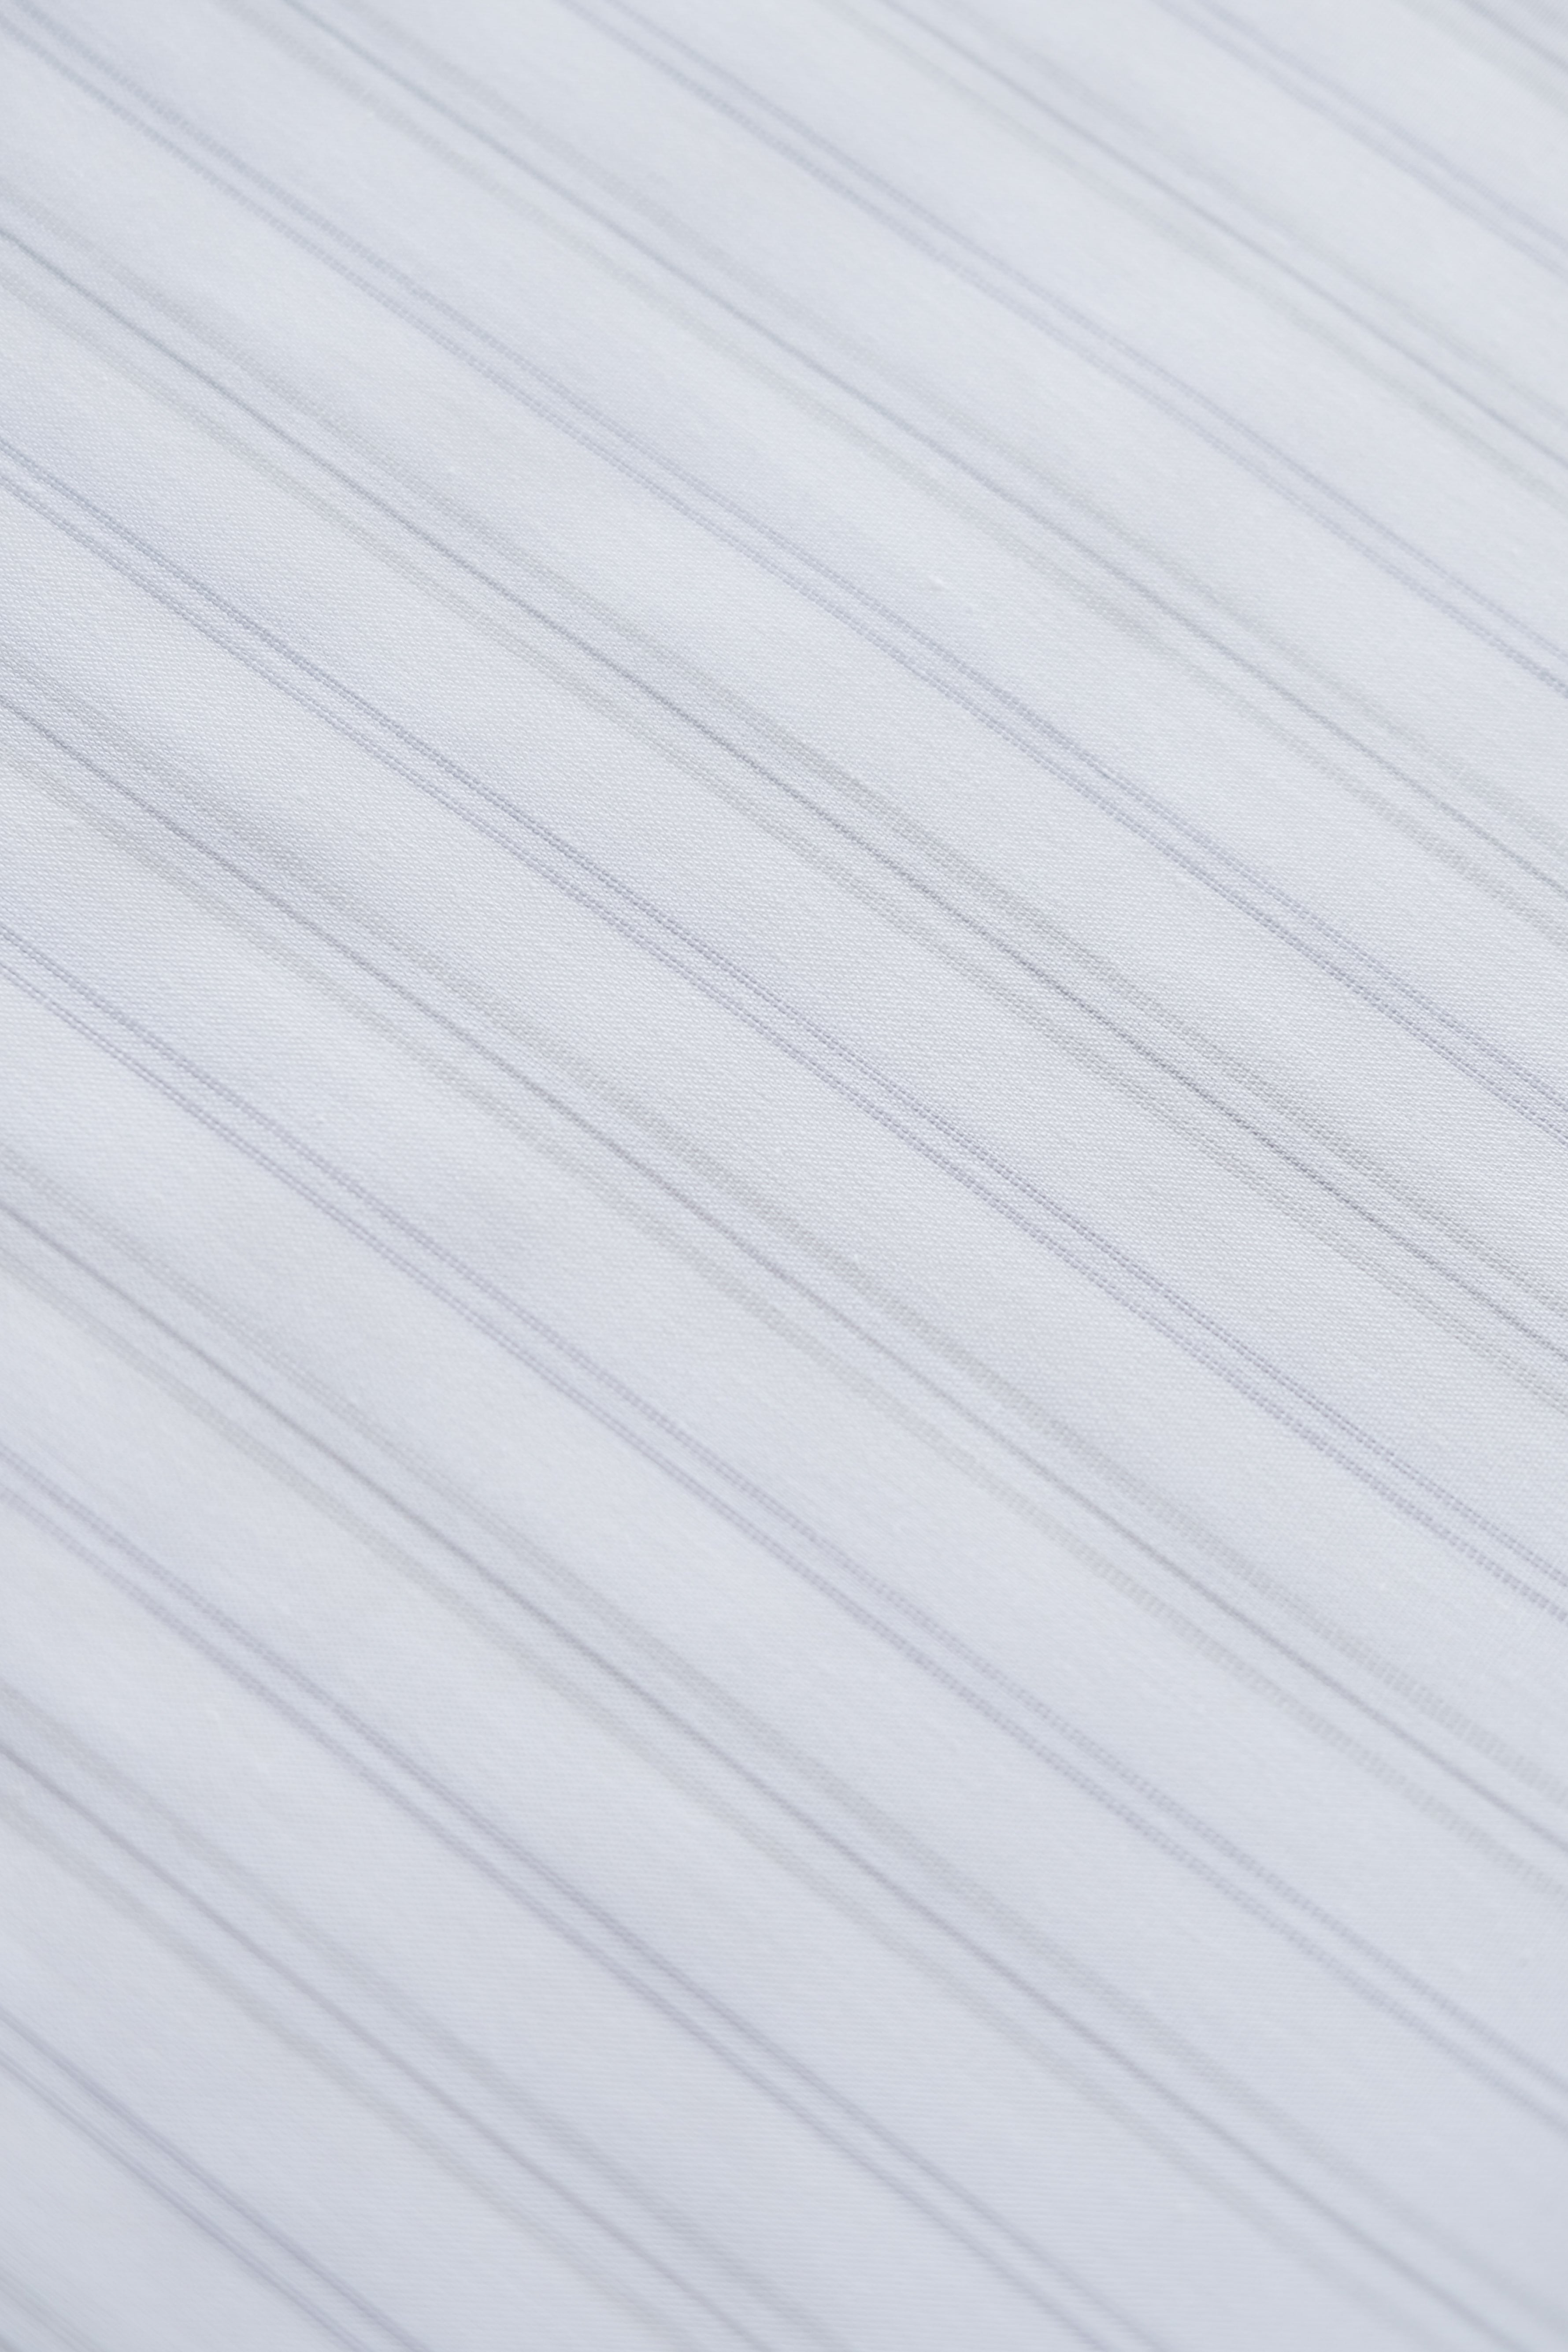 White Striped Sarong (Dual-purpose)